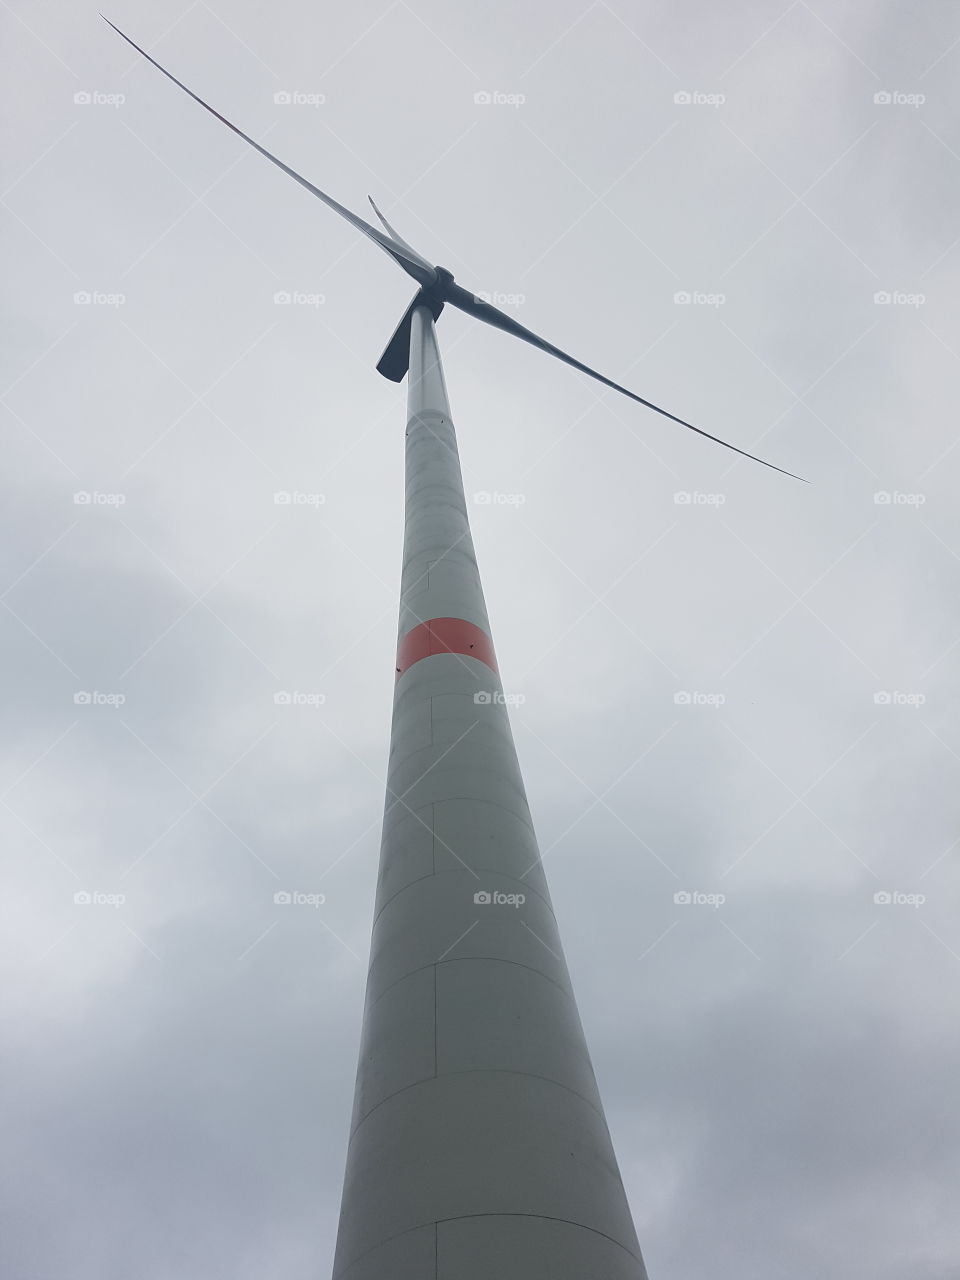 Wind turbine in Germany, Frankfurt